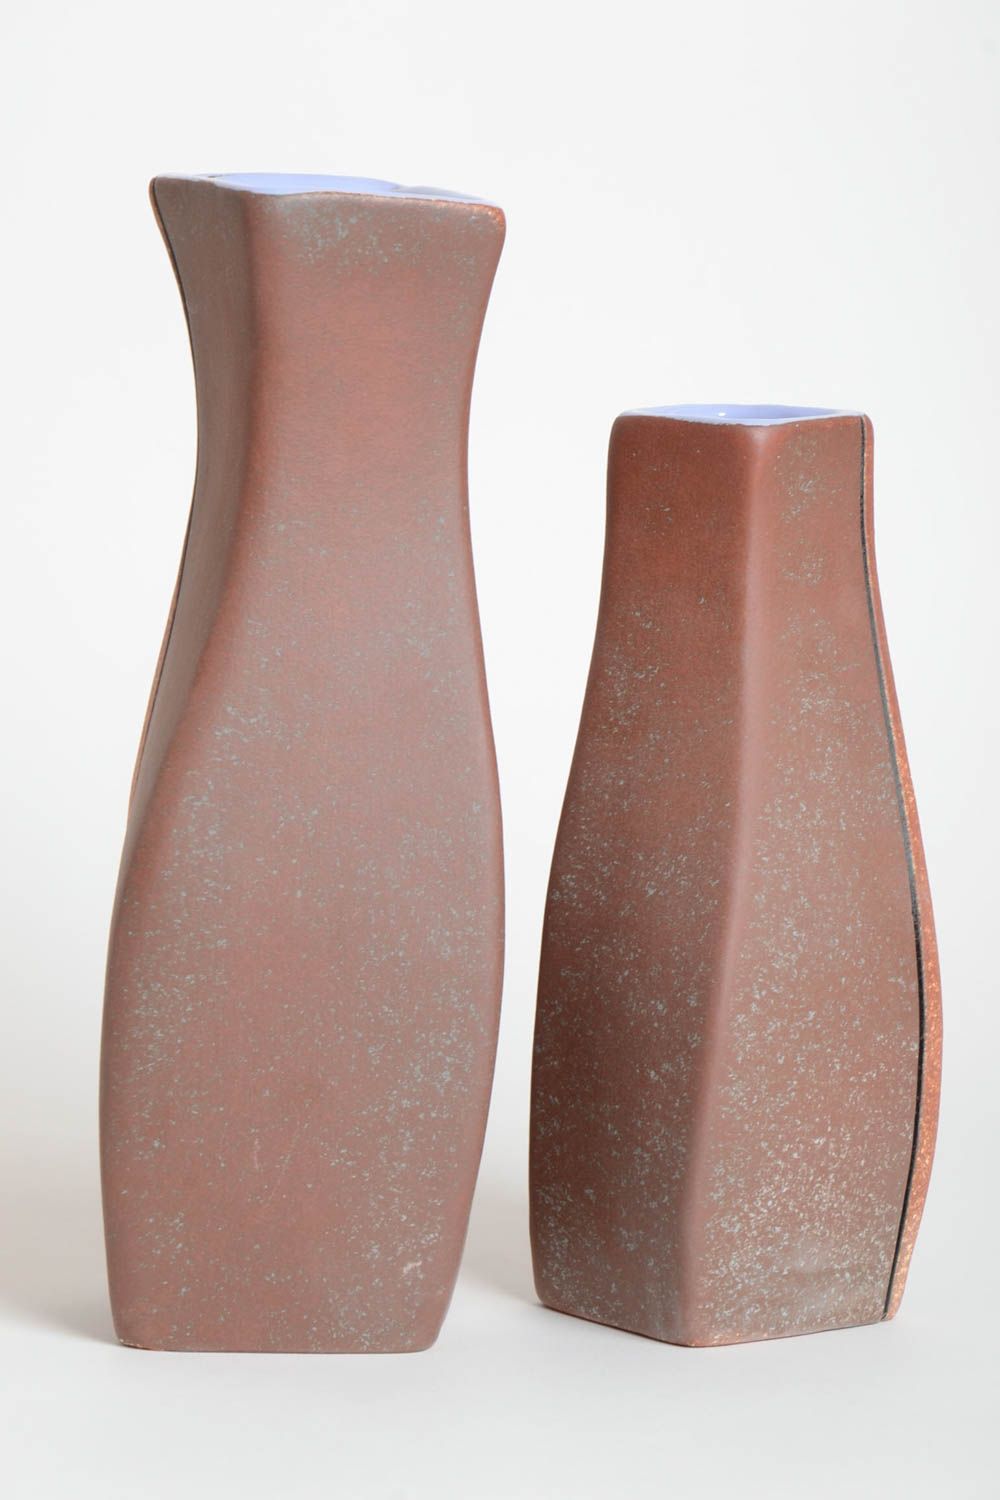 Handmade interior elements stylish ceramic vases 2 flower vases home decor photo 4